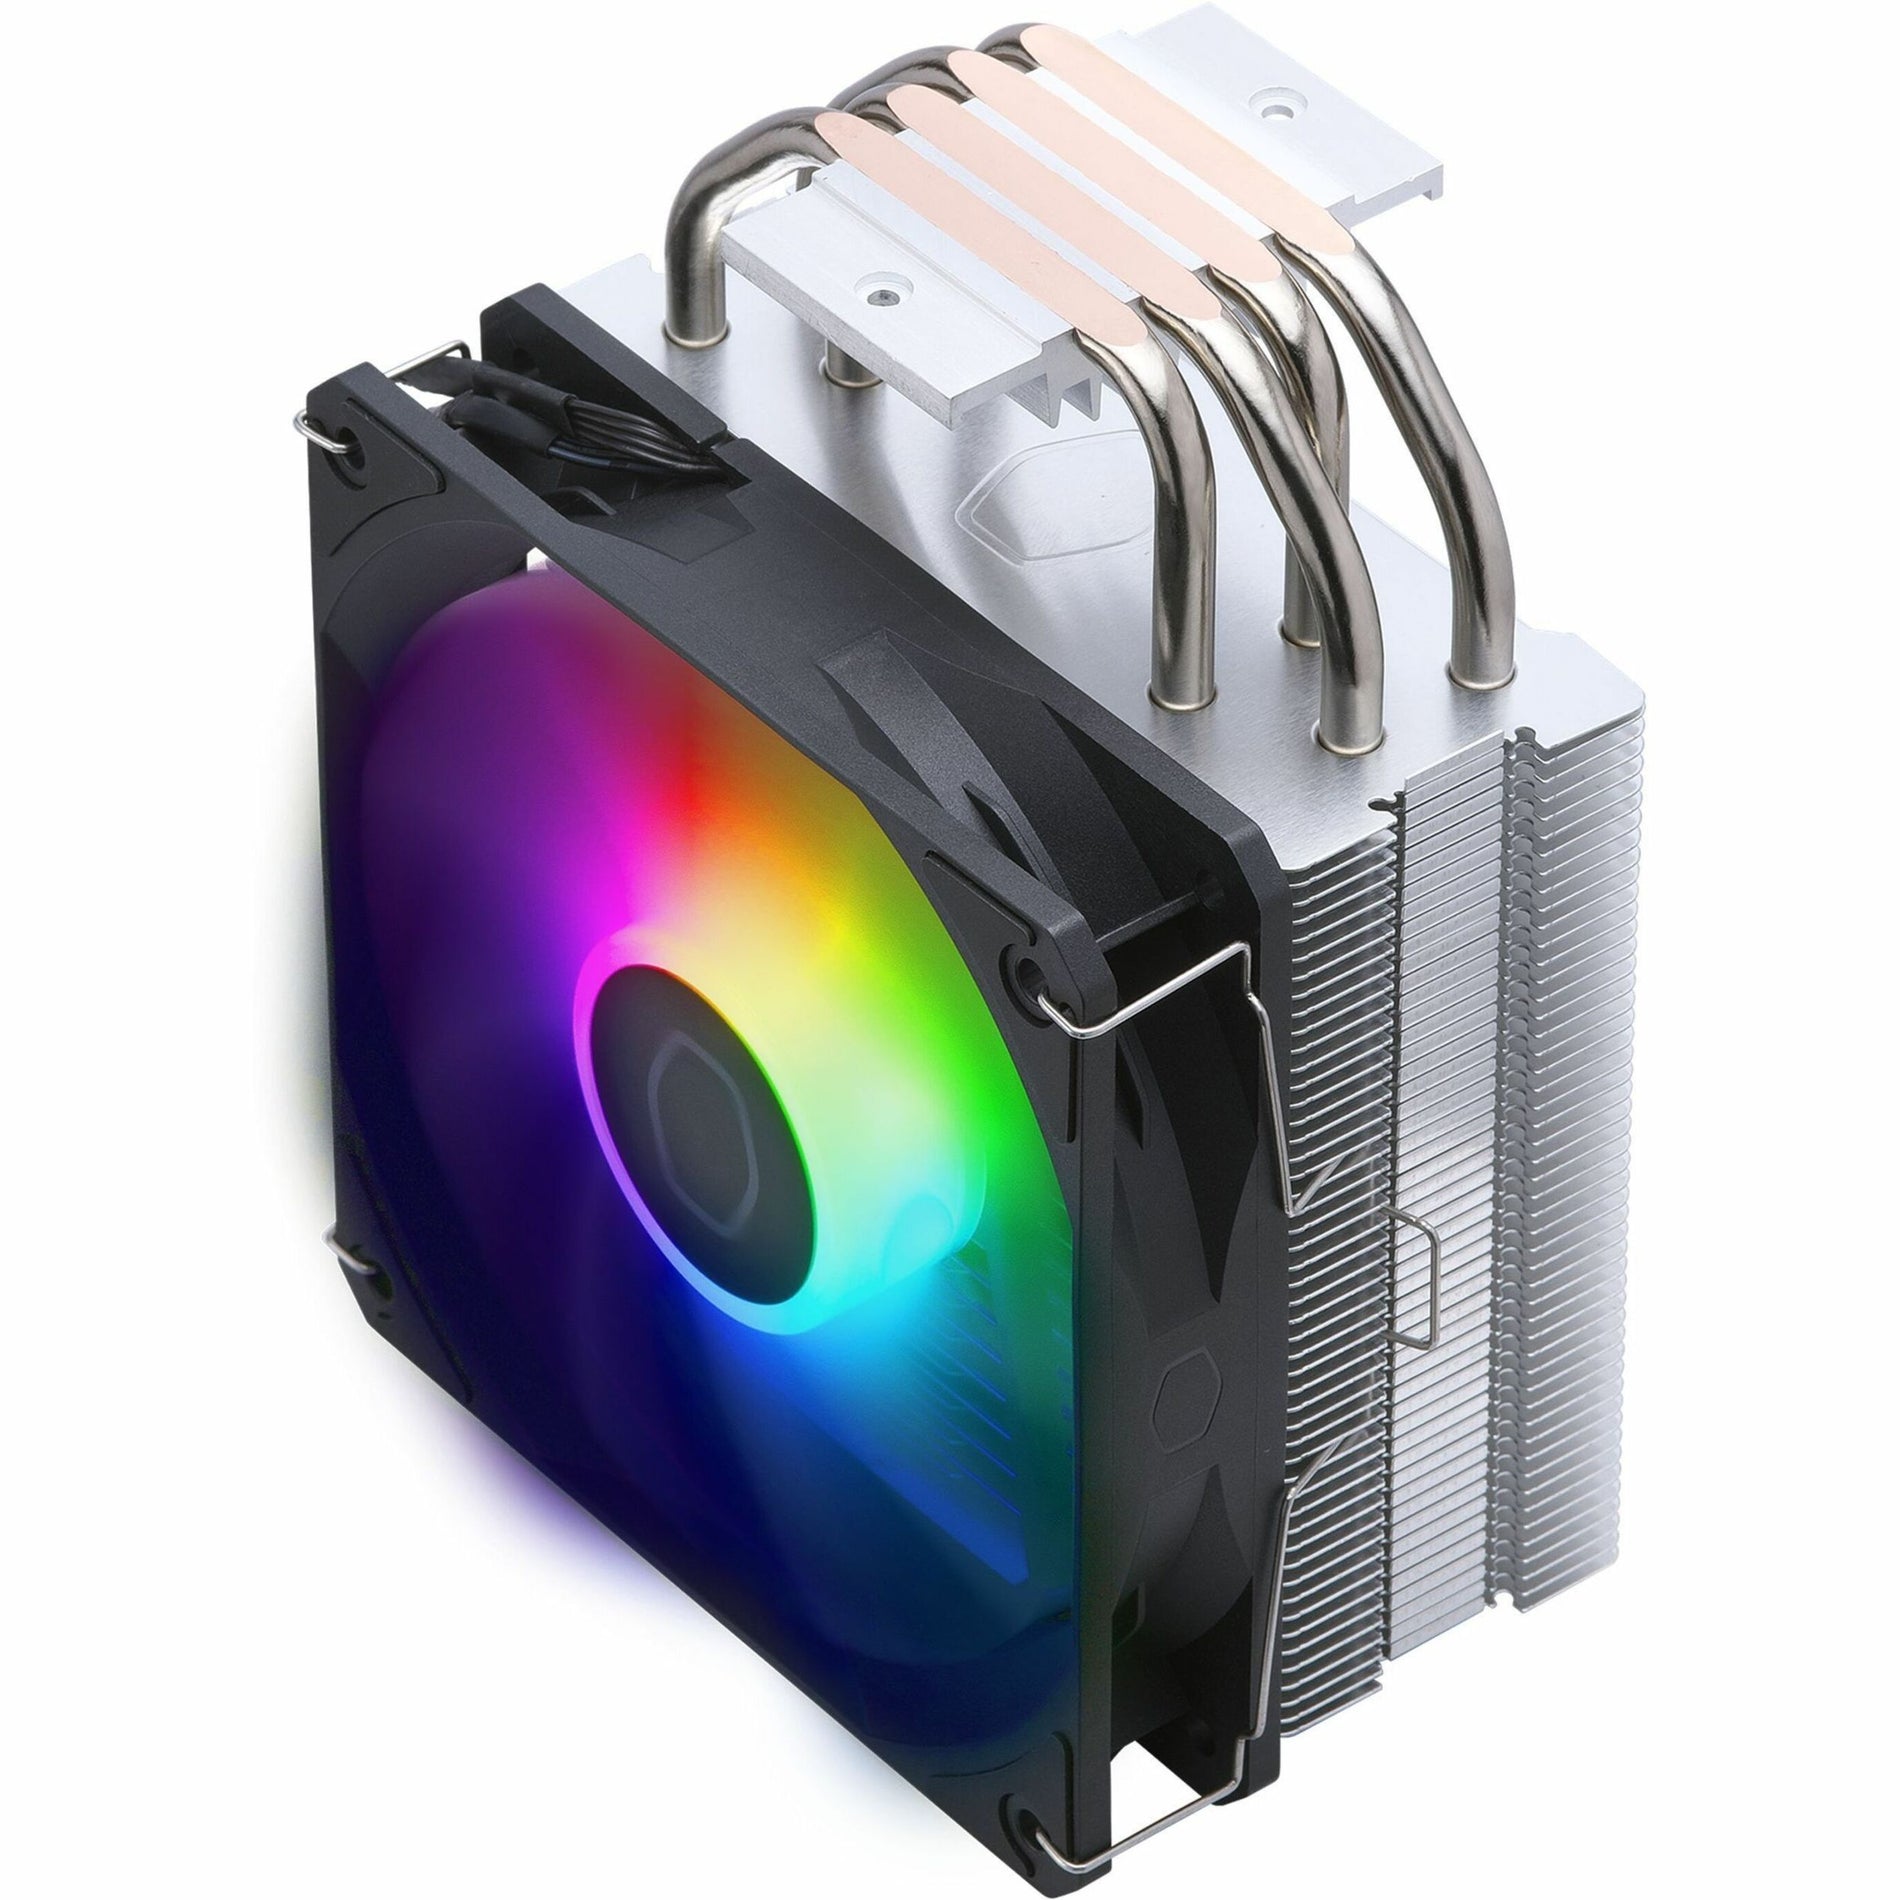 Cooler Master RR-S4NA-17PA-R1 Hyper 212 Spectrum V3 CPU Cooler, Efficient Cooling with ARGB LED, 2-Year Warranty